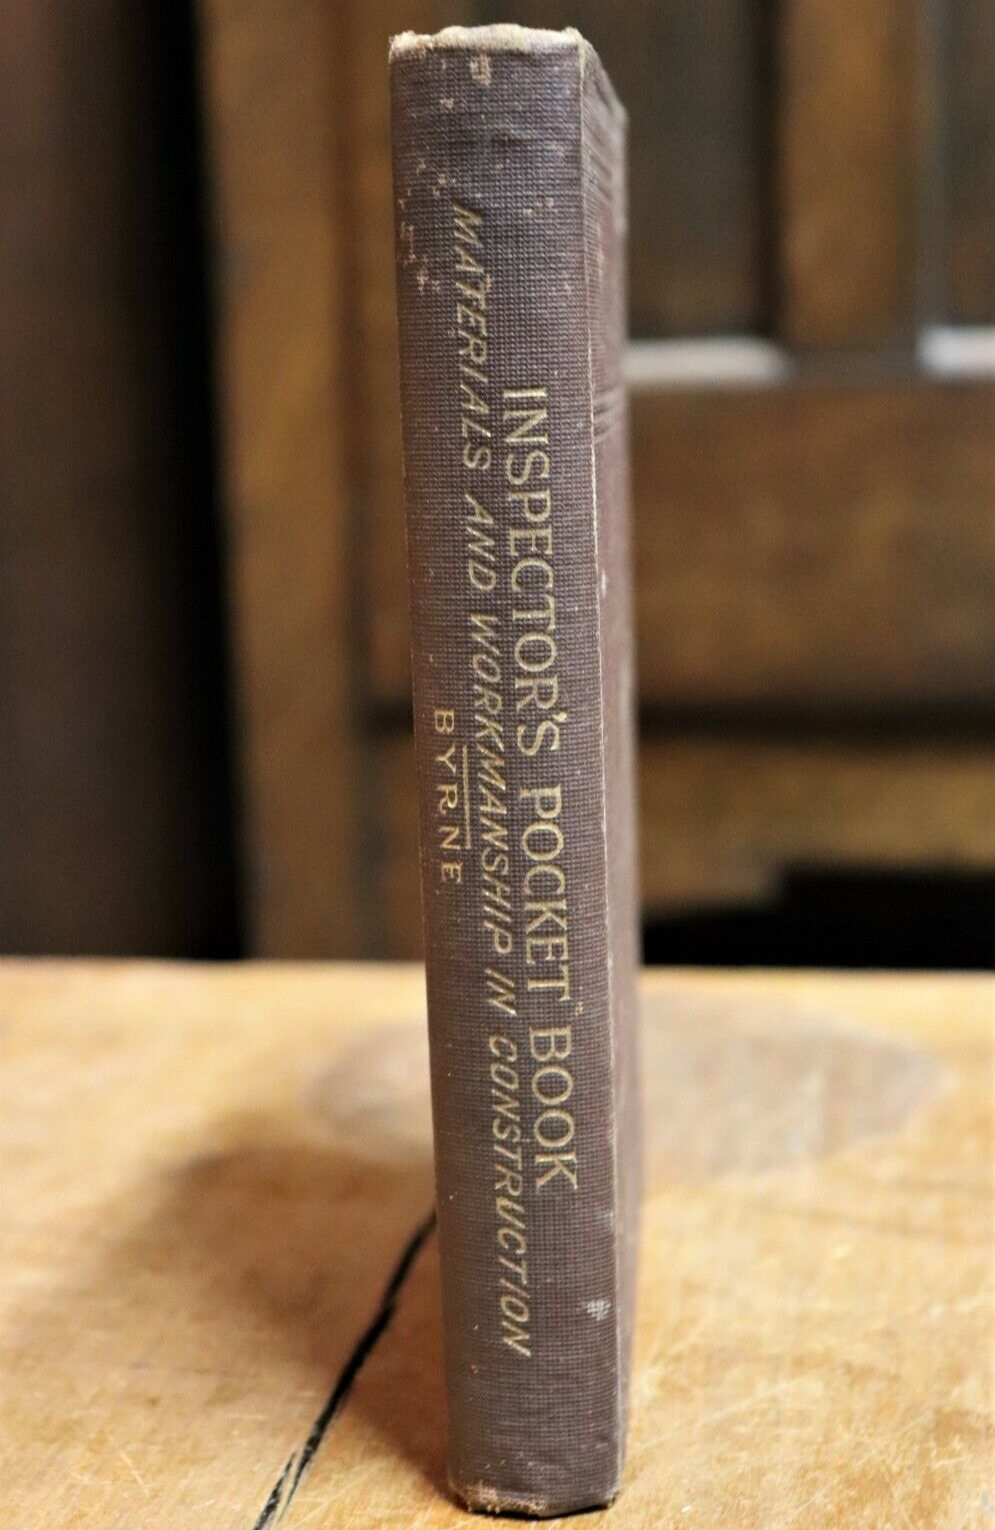 1898 Byrne's Construction Inspectors Pocket Book Rare Antiquarian Book